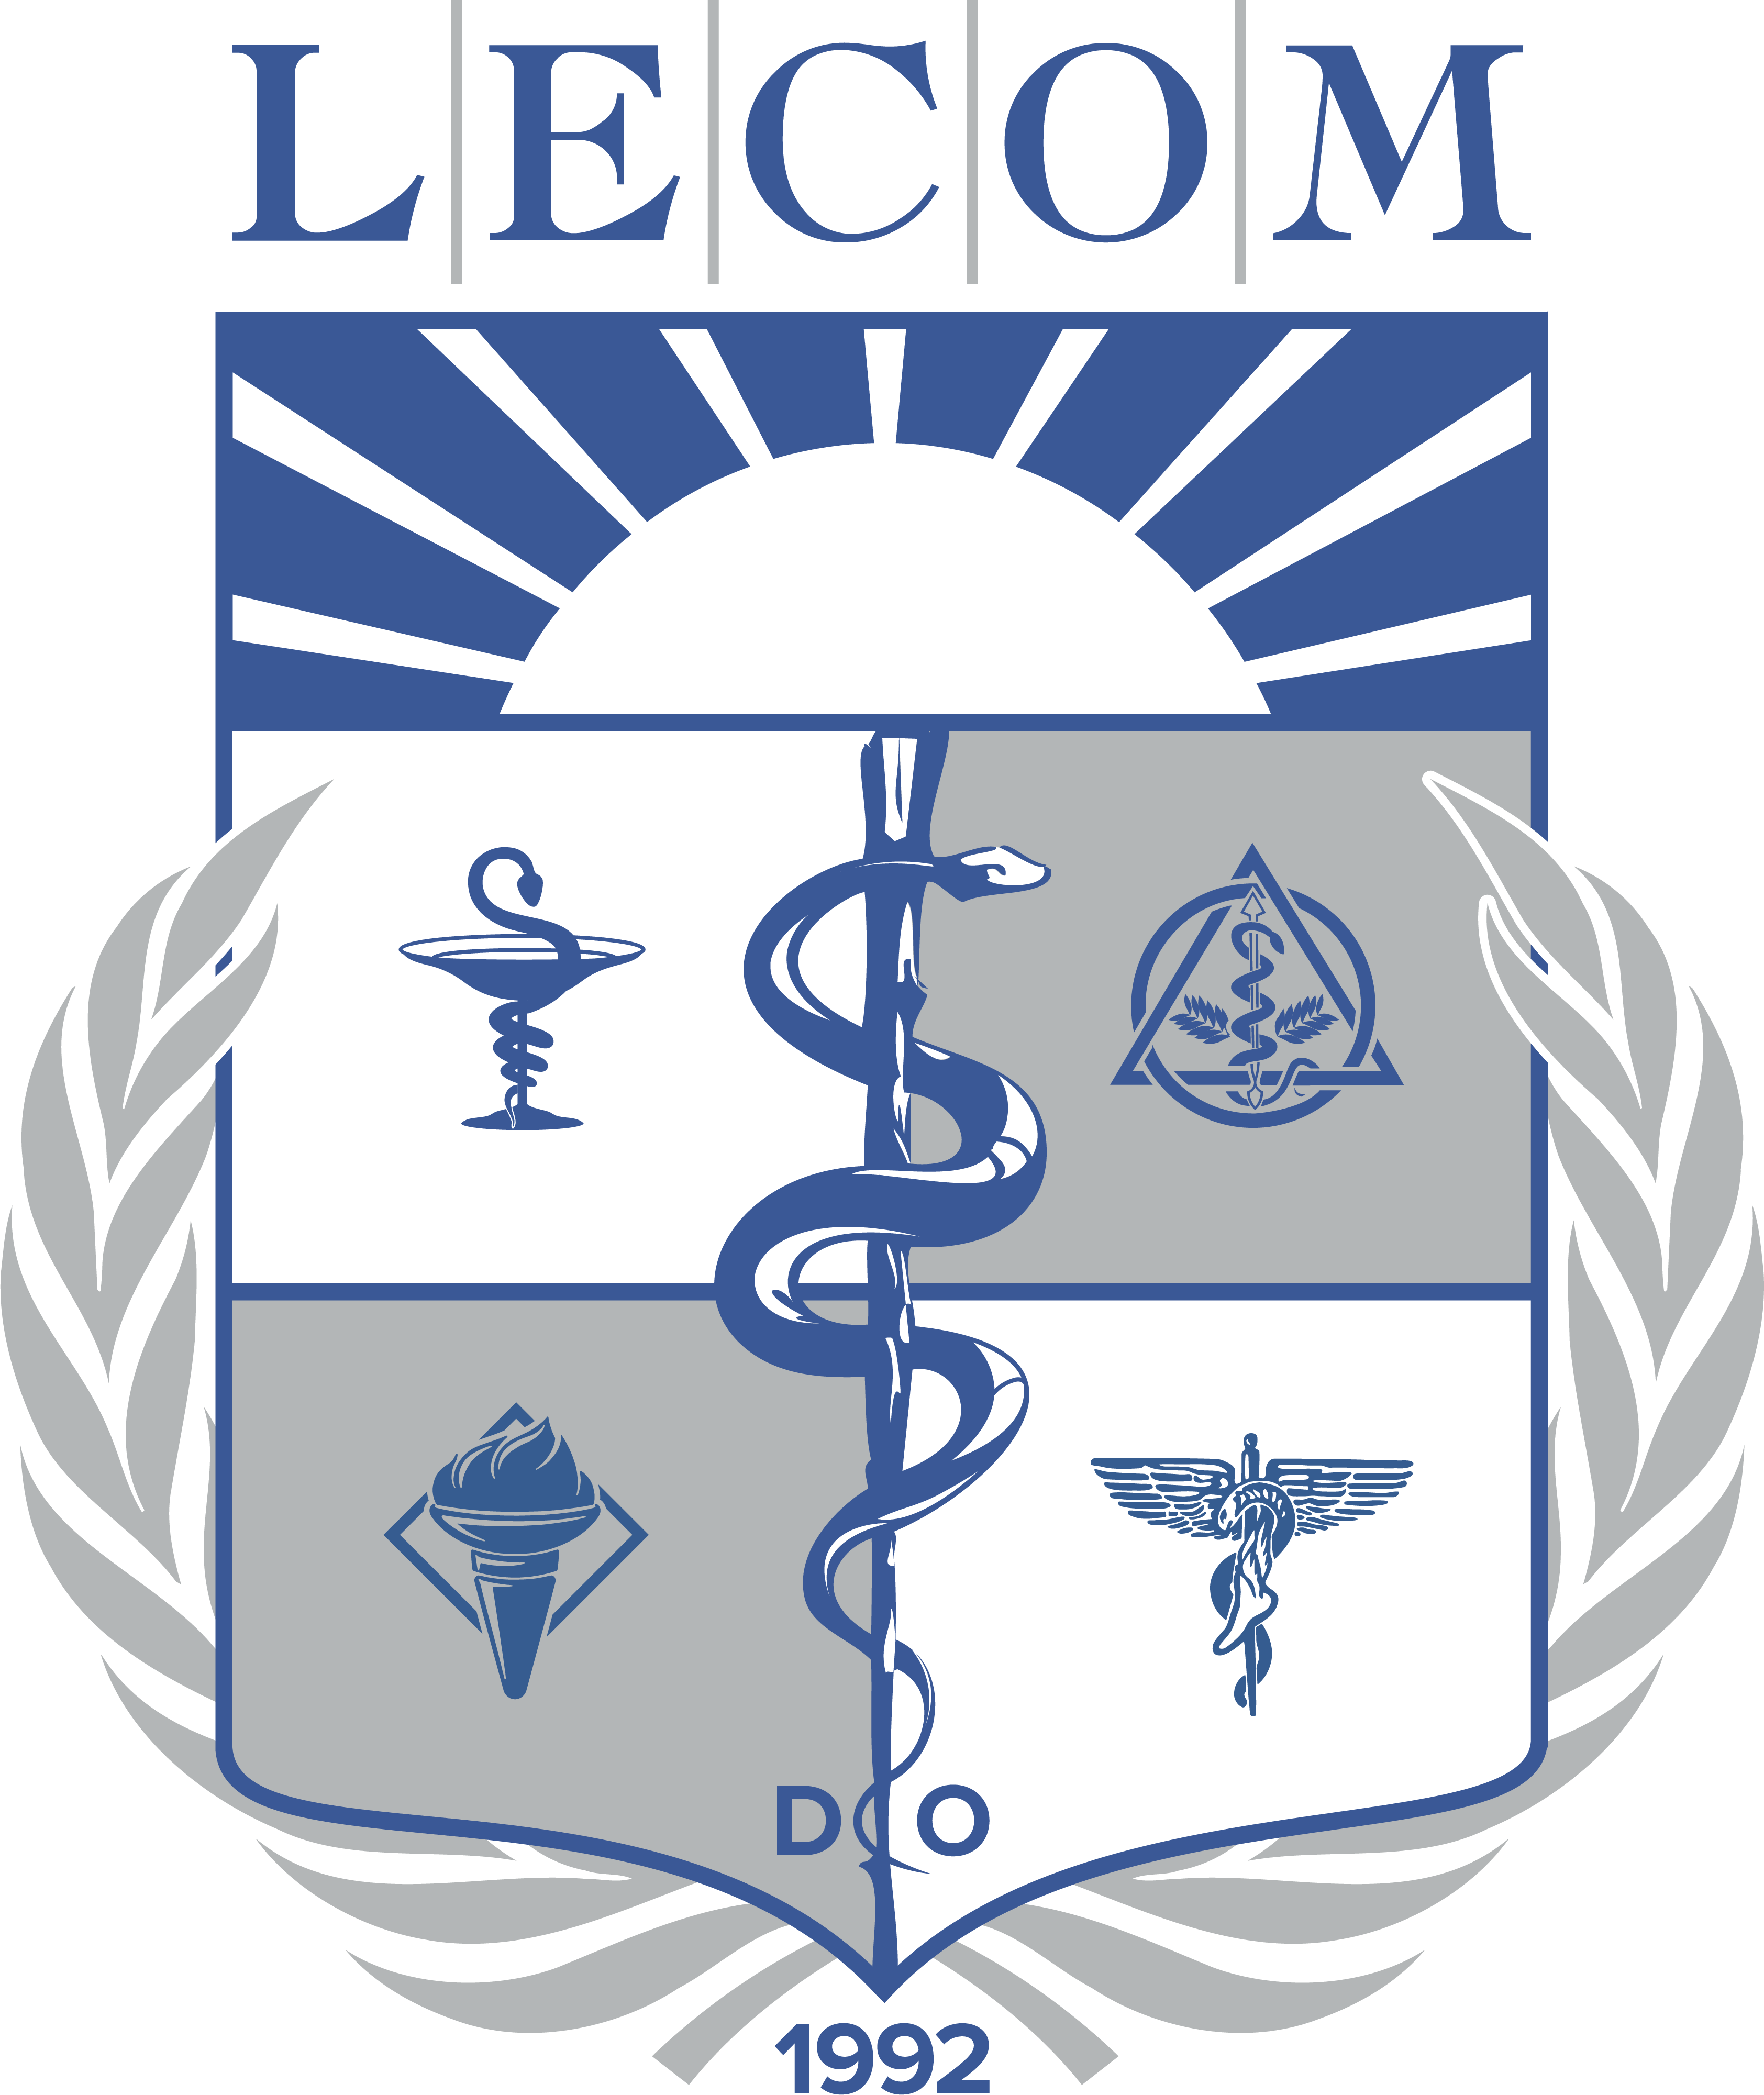 LECOM 30th Logo